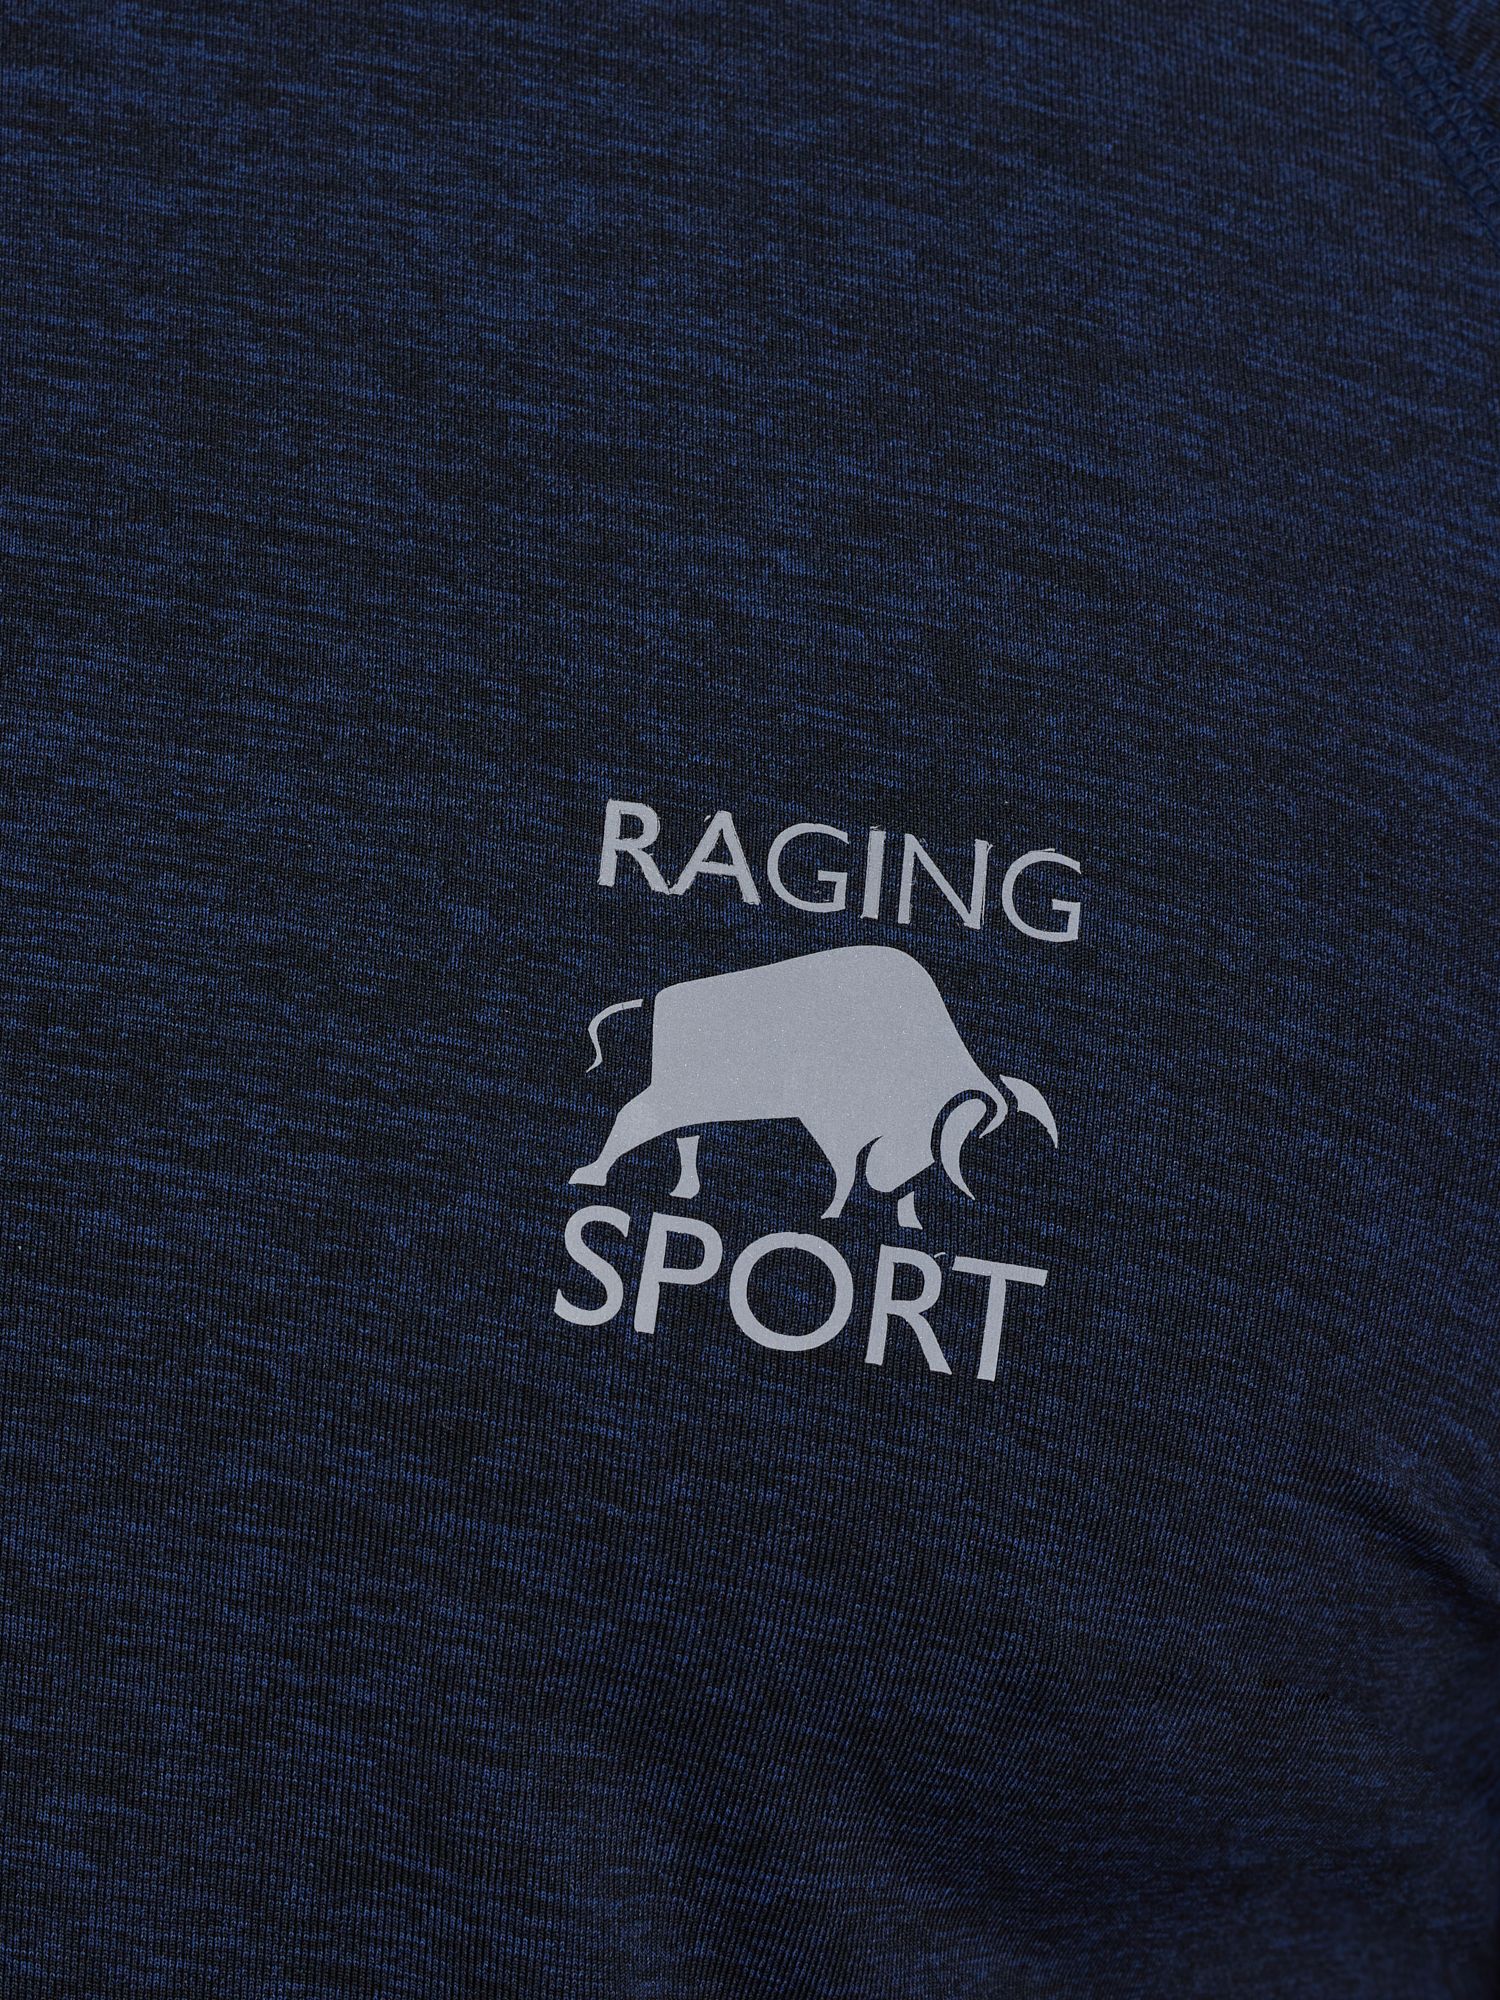 Raging Bull Performance T-Shirt, Navy, XXL